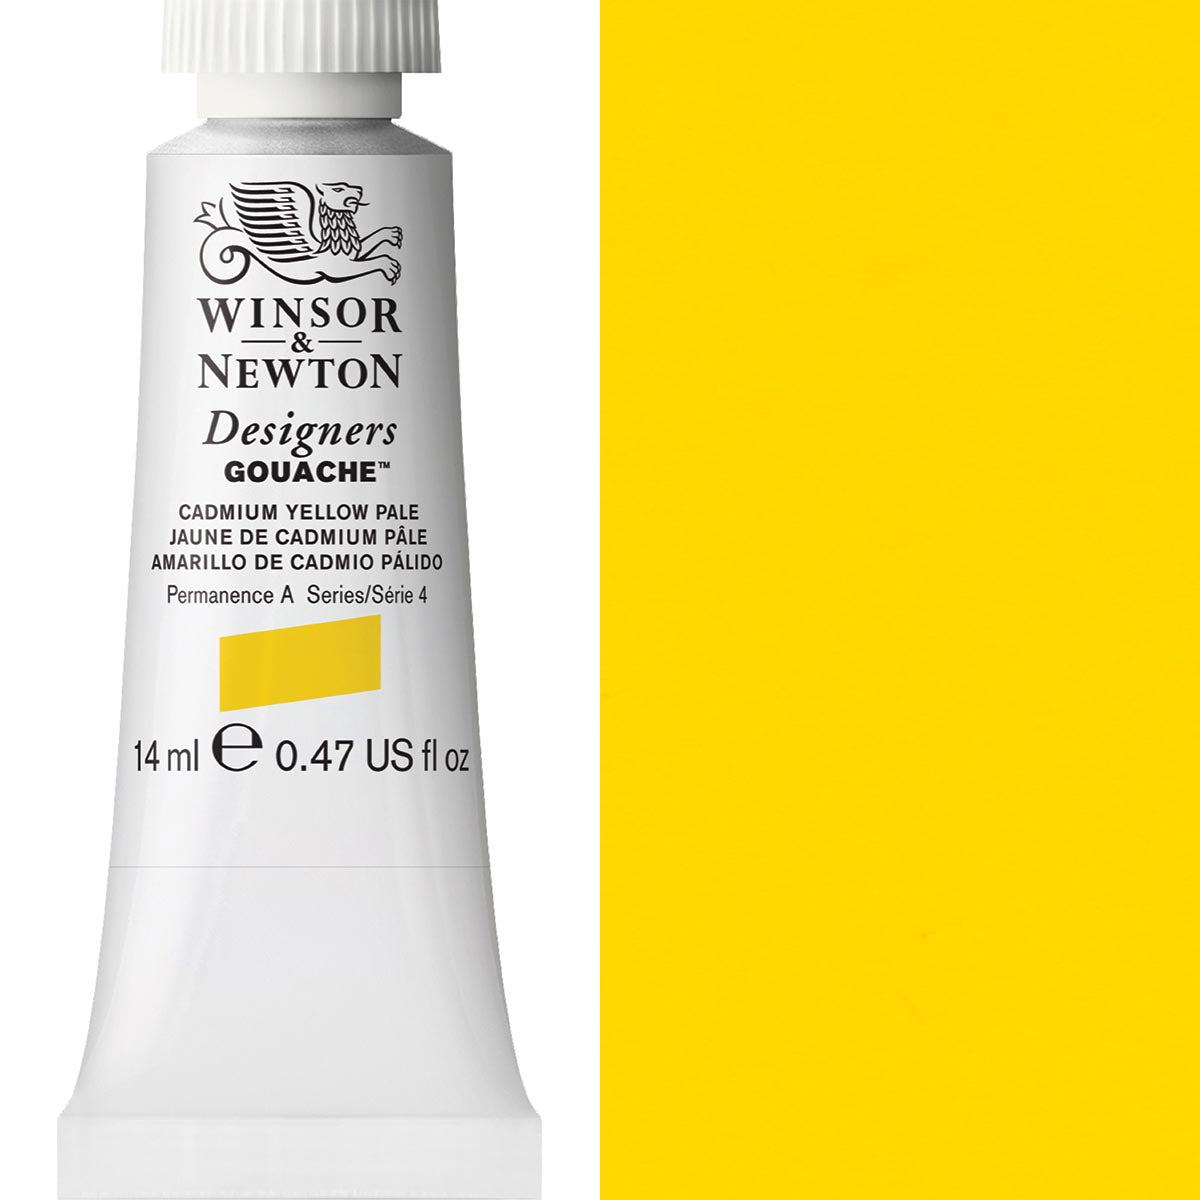 Winsor and Newton - Designers Gouache - 14ml - Cadmium Yellow Pale